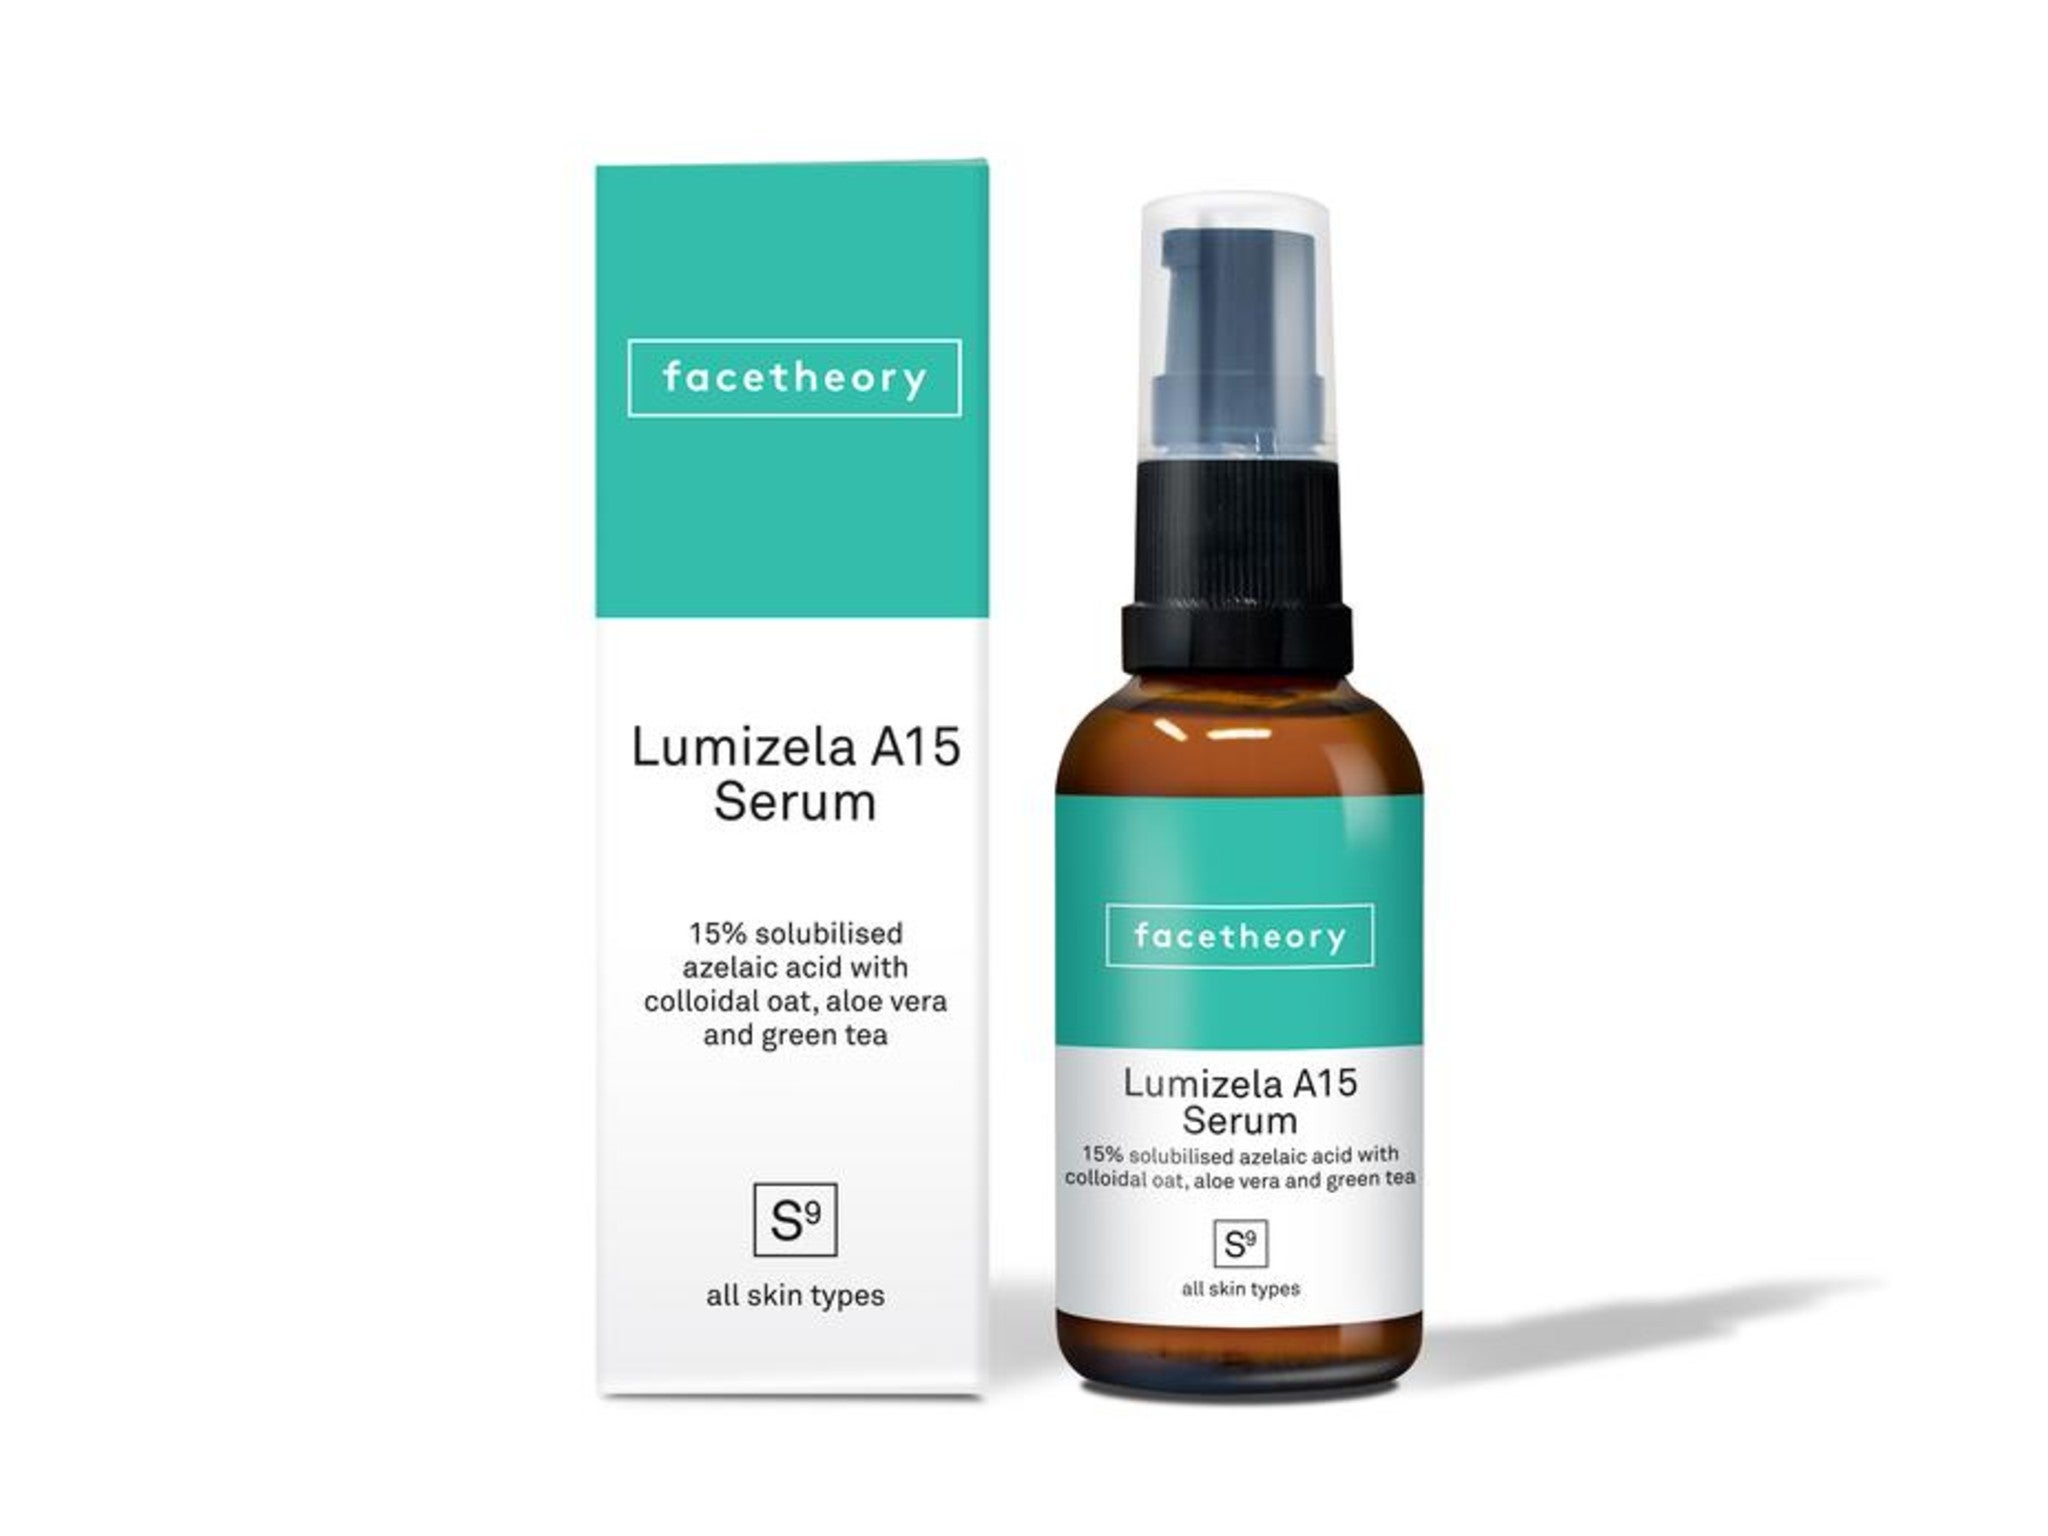 Facetheory lumizela azelaic acid serum A15 indybest.jpeg